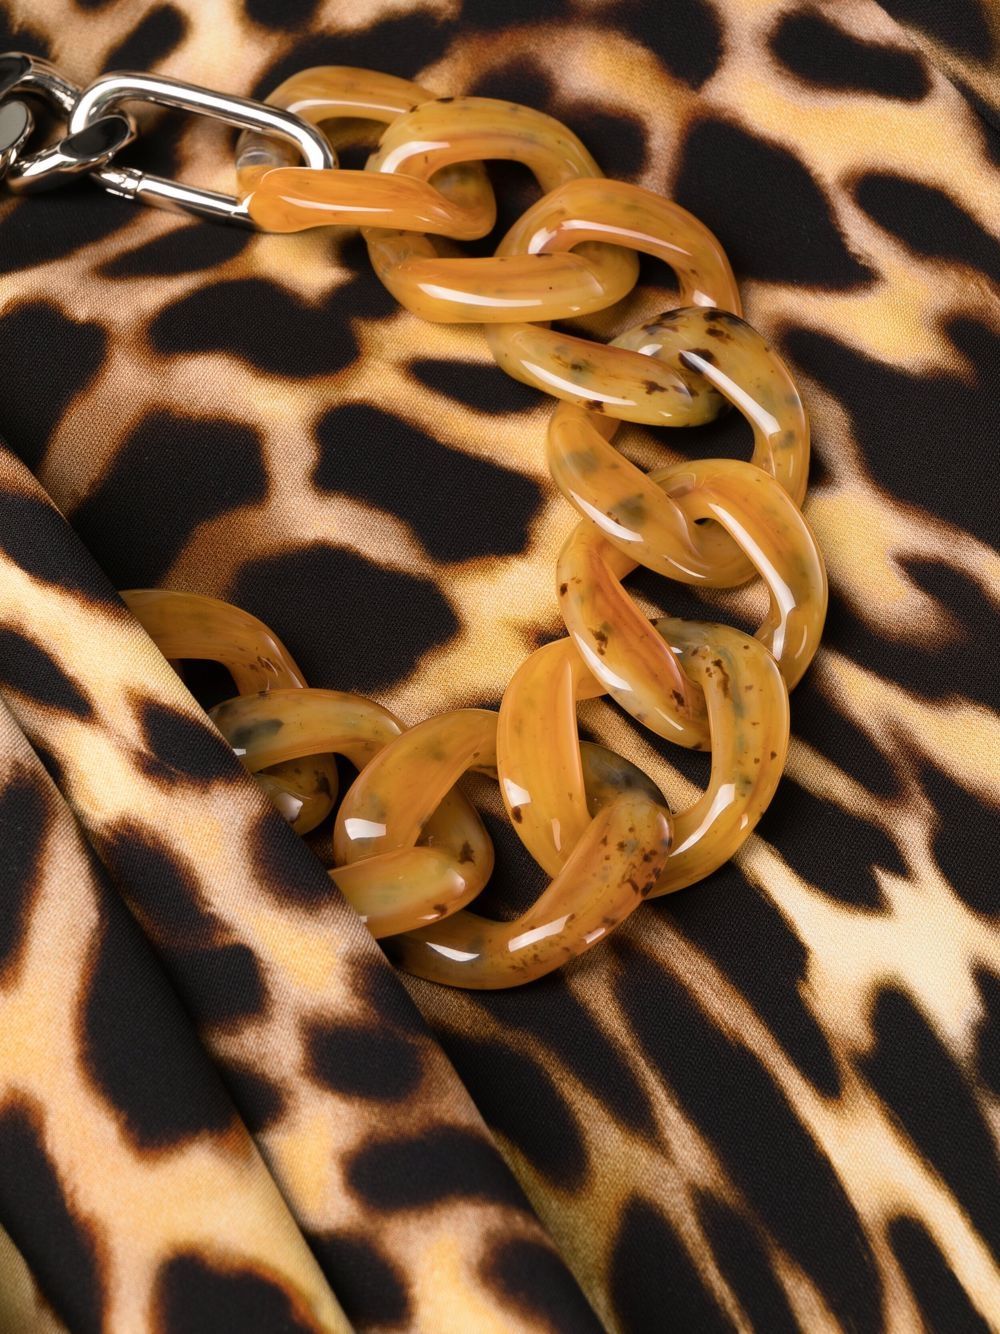 Chain-embellished Dress - Leopard